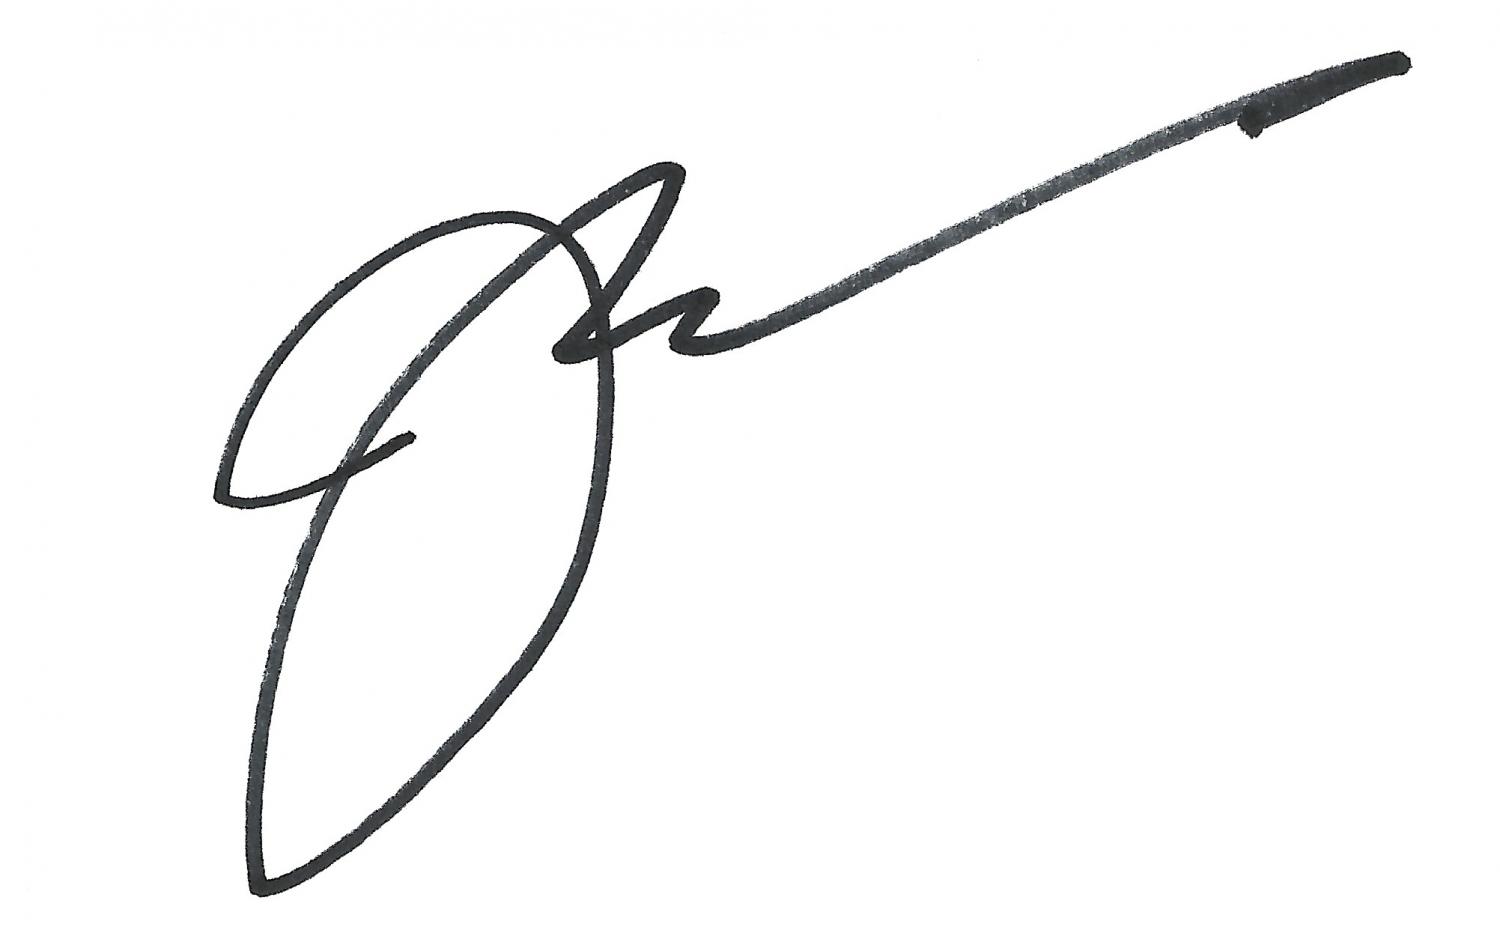 Jim Enote's signature